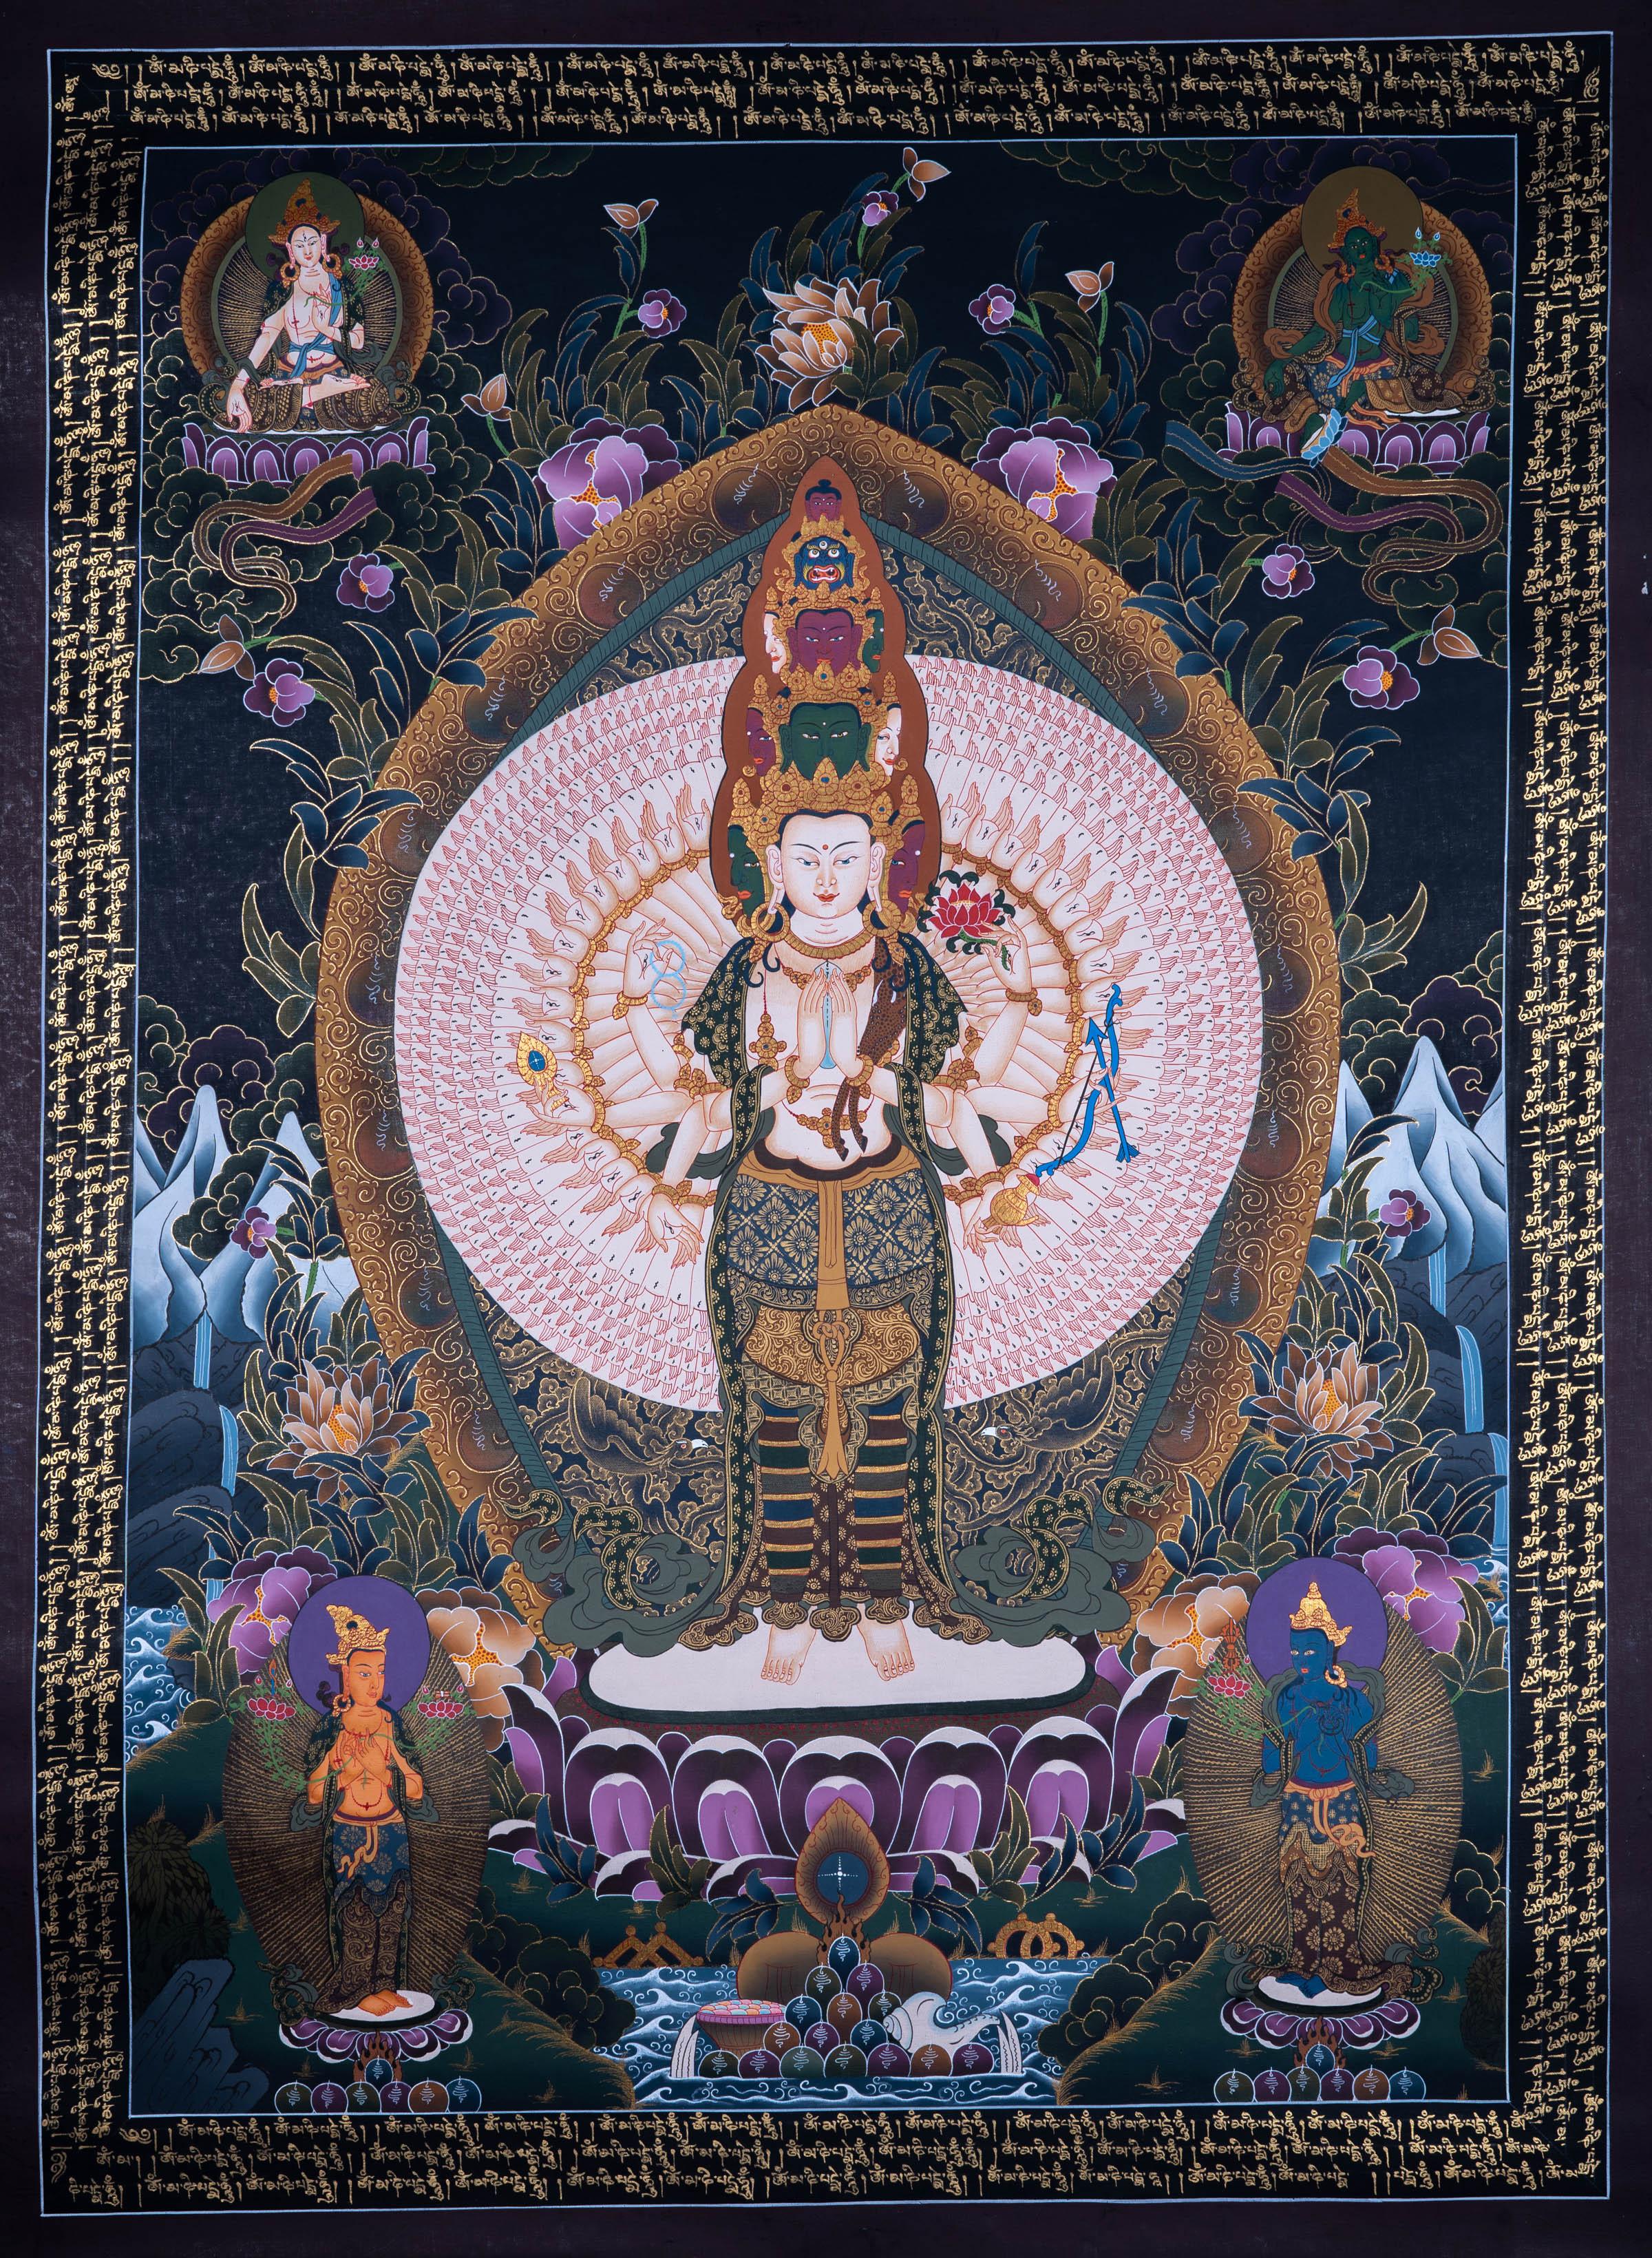 Avalokiteshvara Thangka painting from The Himalayas